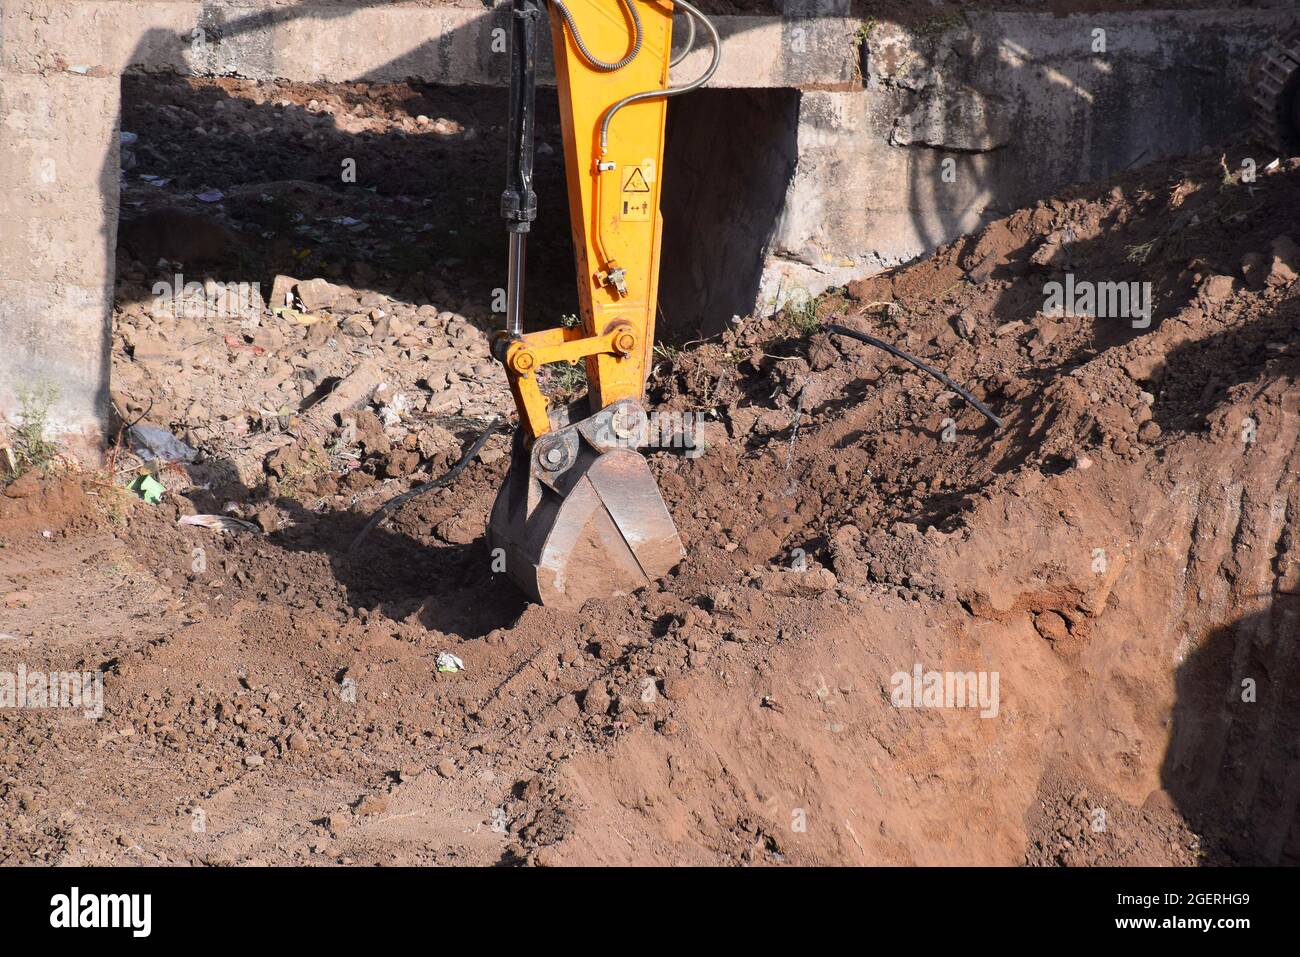 08-05-2020,Bhadapipalya, Madhya Pradesh, India, The modern excavator JCB performs excavation work on the construction site Stock Photo